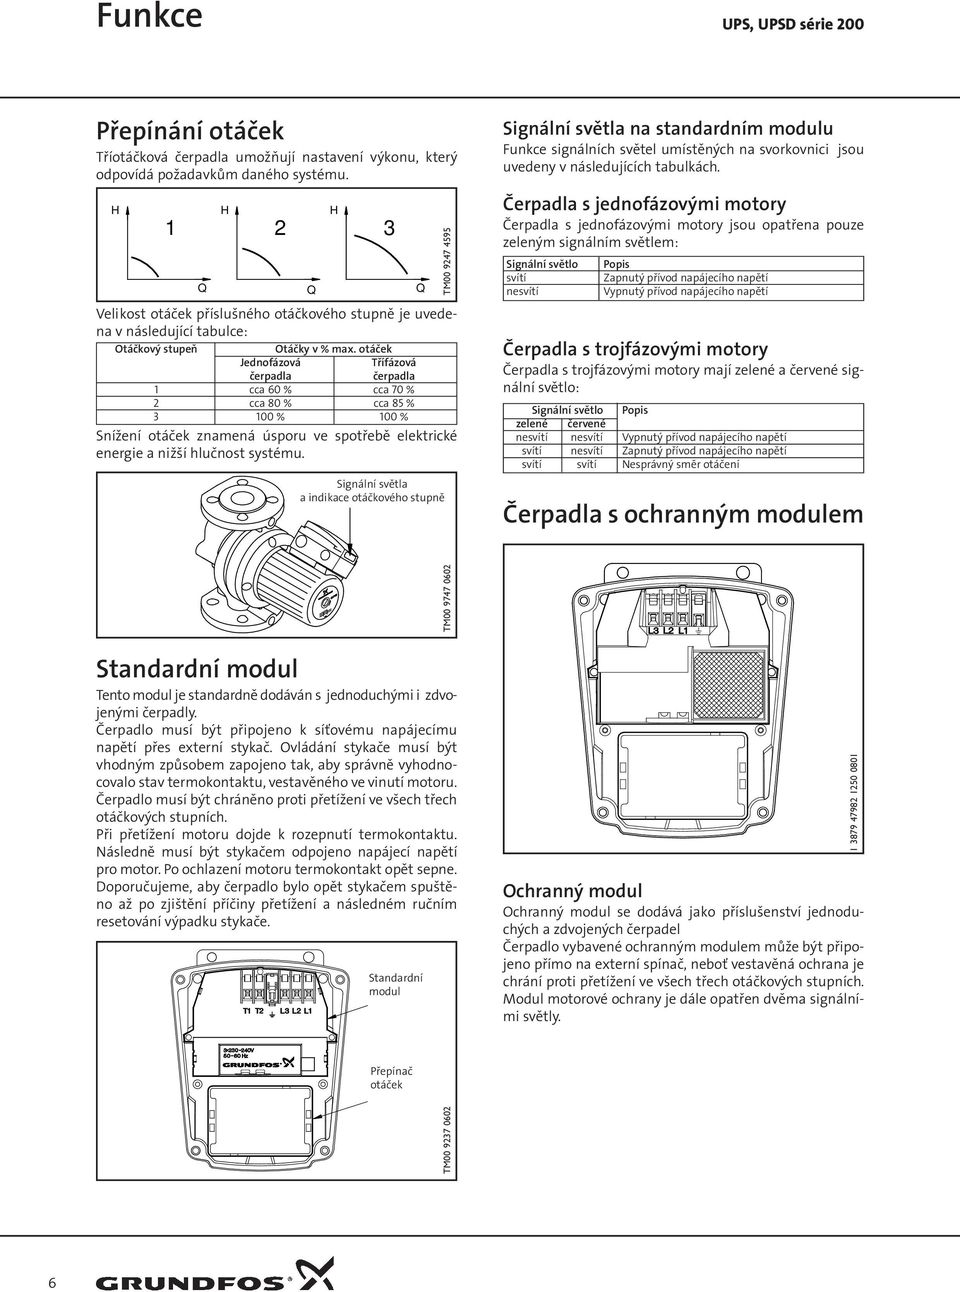 TECHNICKÝ KATALOG GRUNDFOS - PDF Free Download